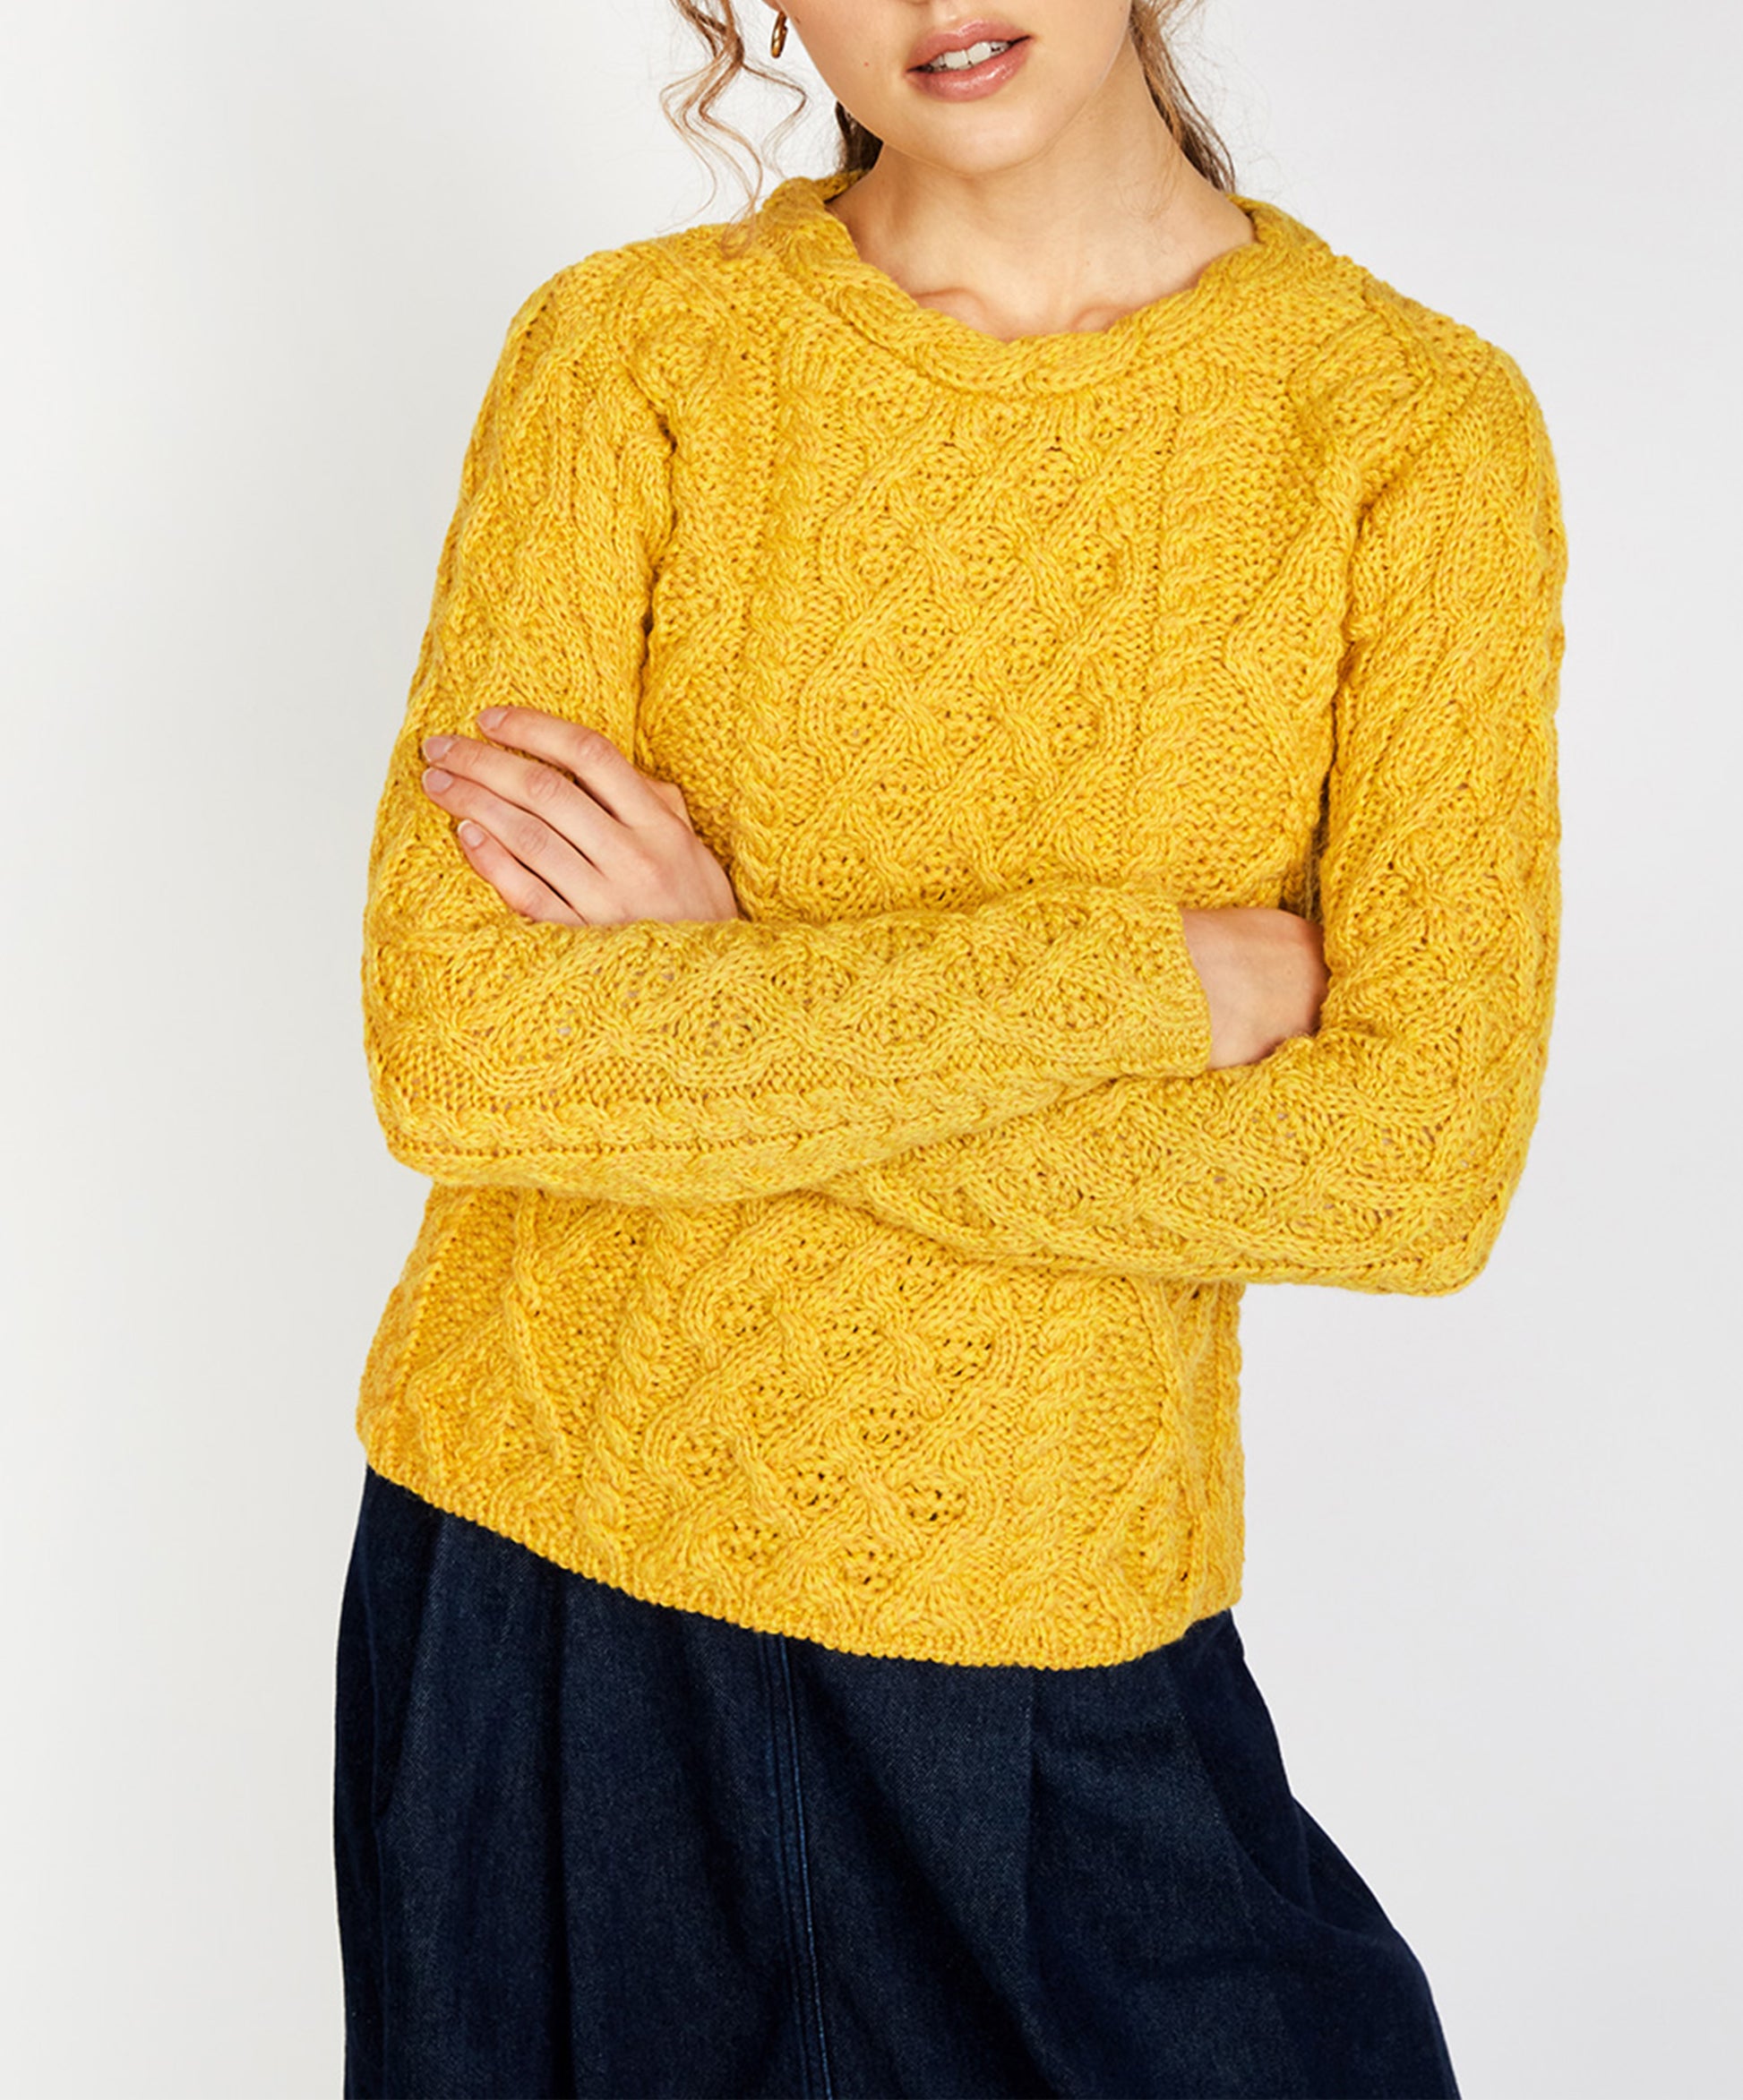 IrelandsEye Knitwear Lambay Lattice Cable Aran Sweater Sunflower